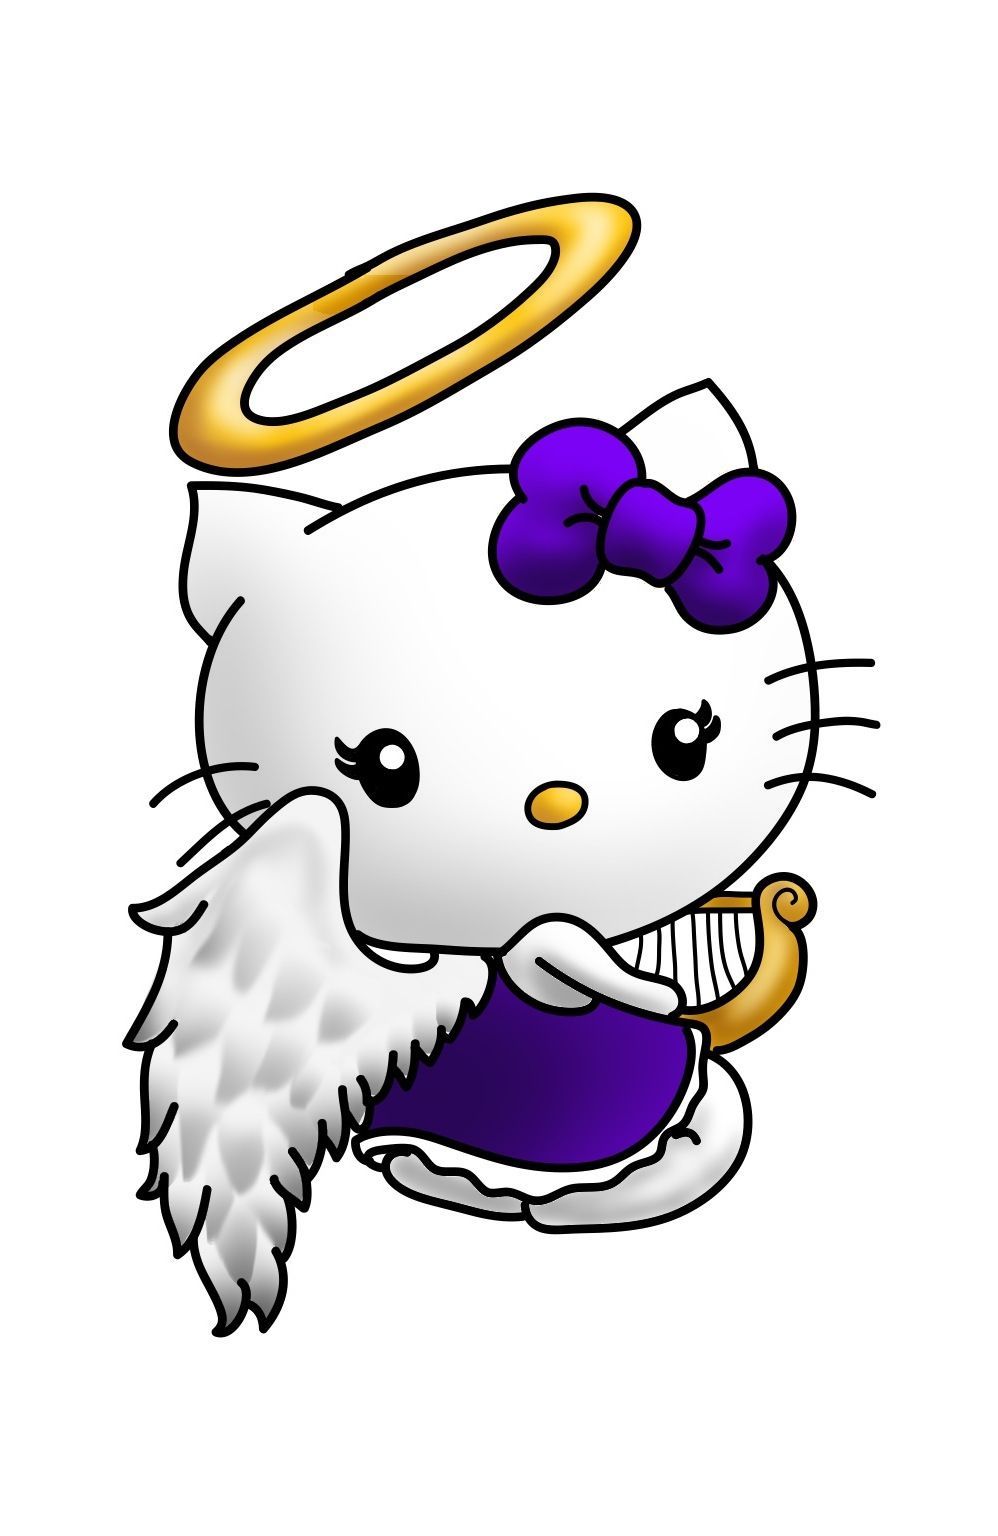 Hello Angel Kitty. Hello kitty picture, Hello kitty characters, Hello kitty image